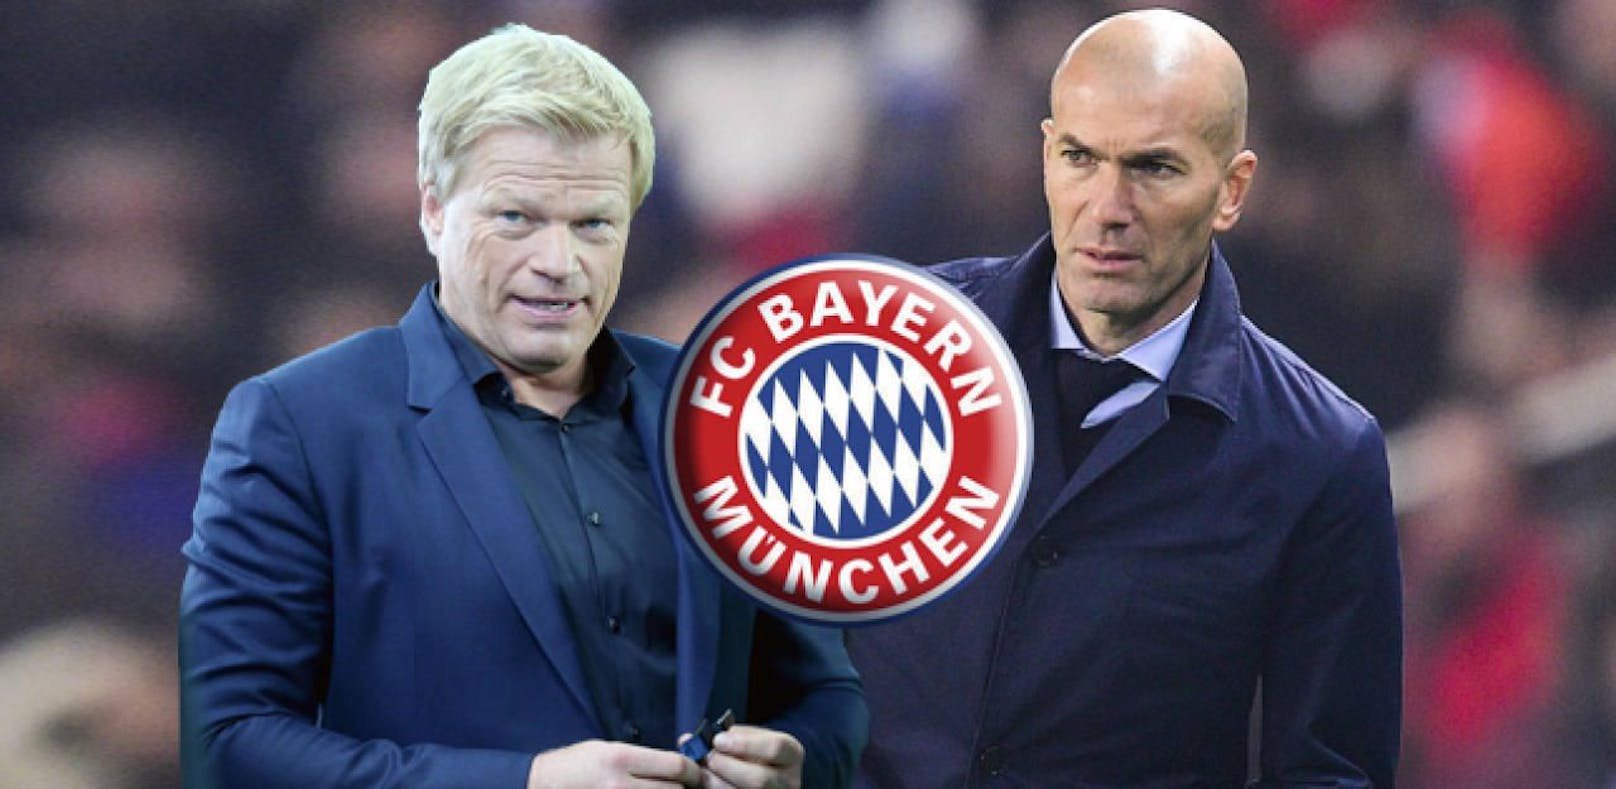 Kahn: "Zidane würde perfekt zu Bayern passen"